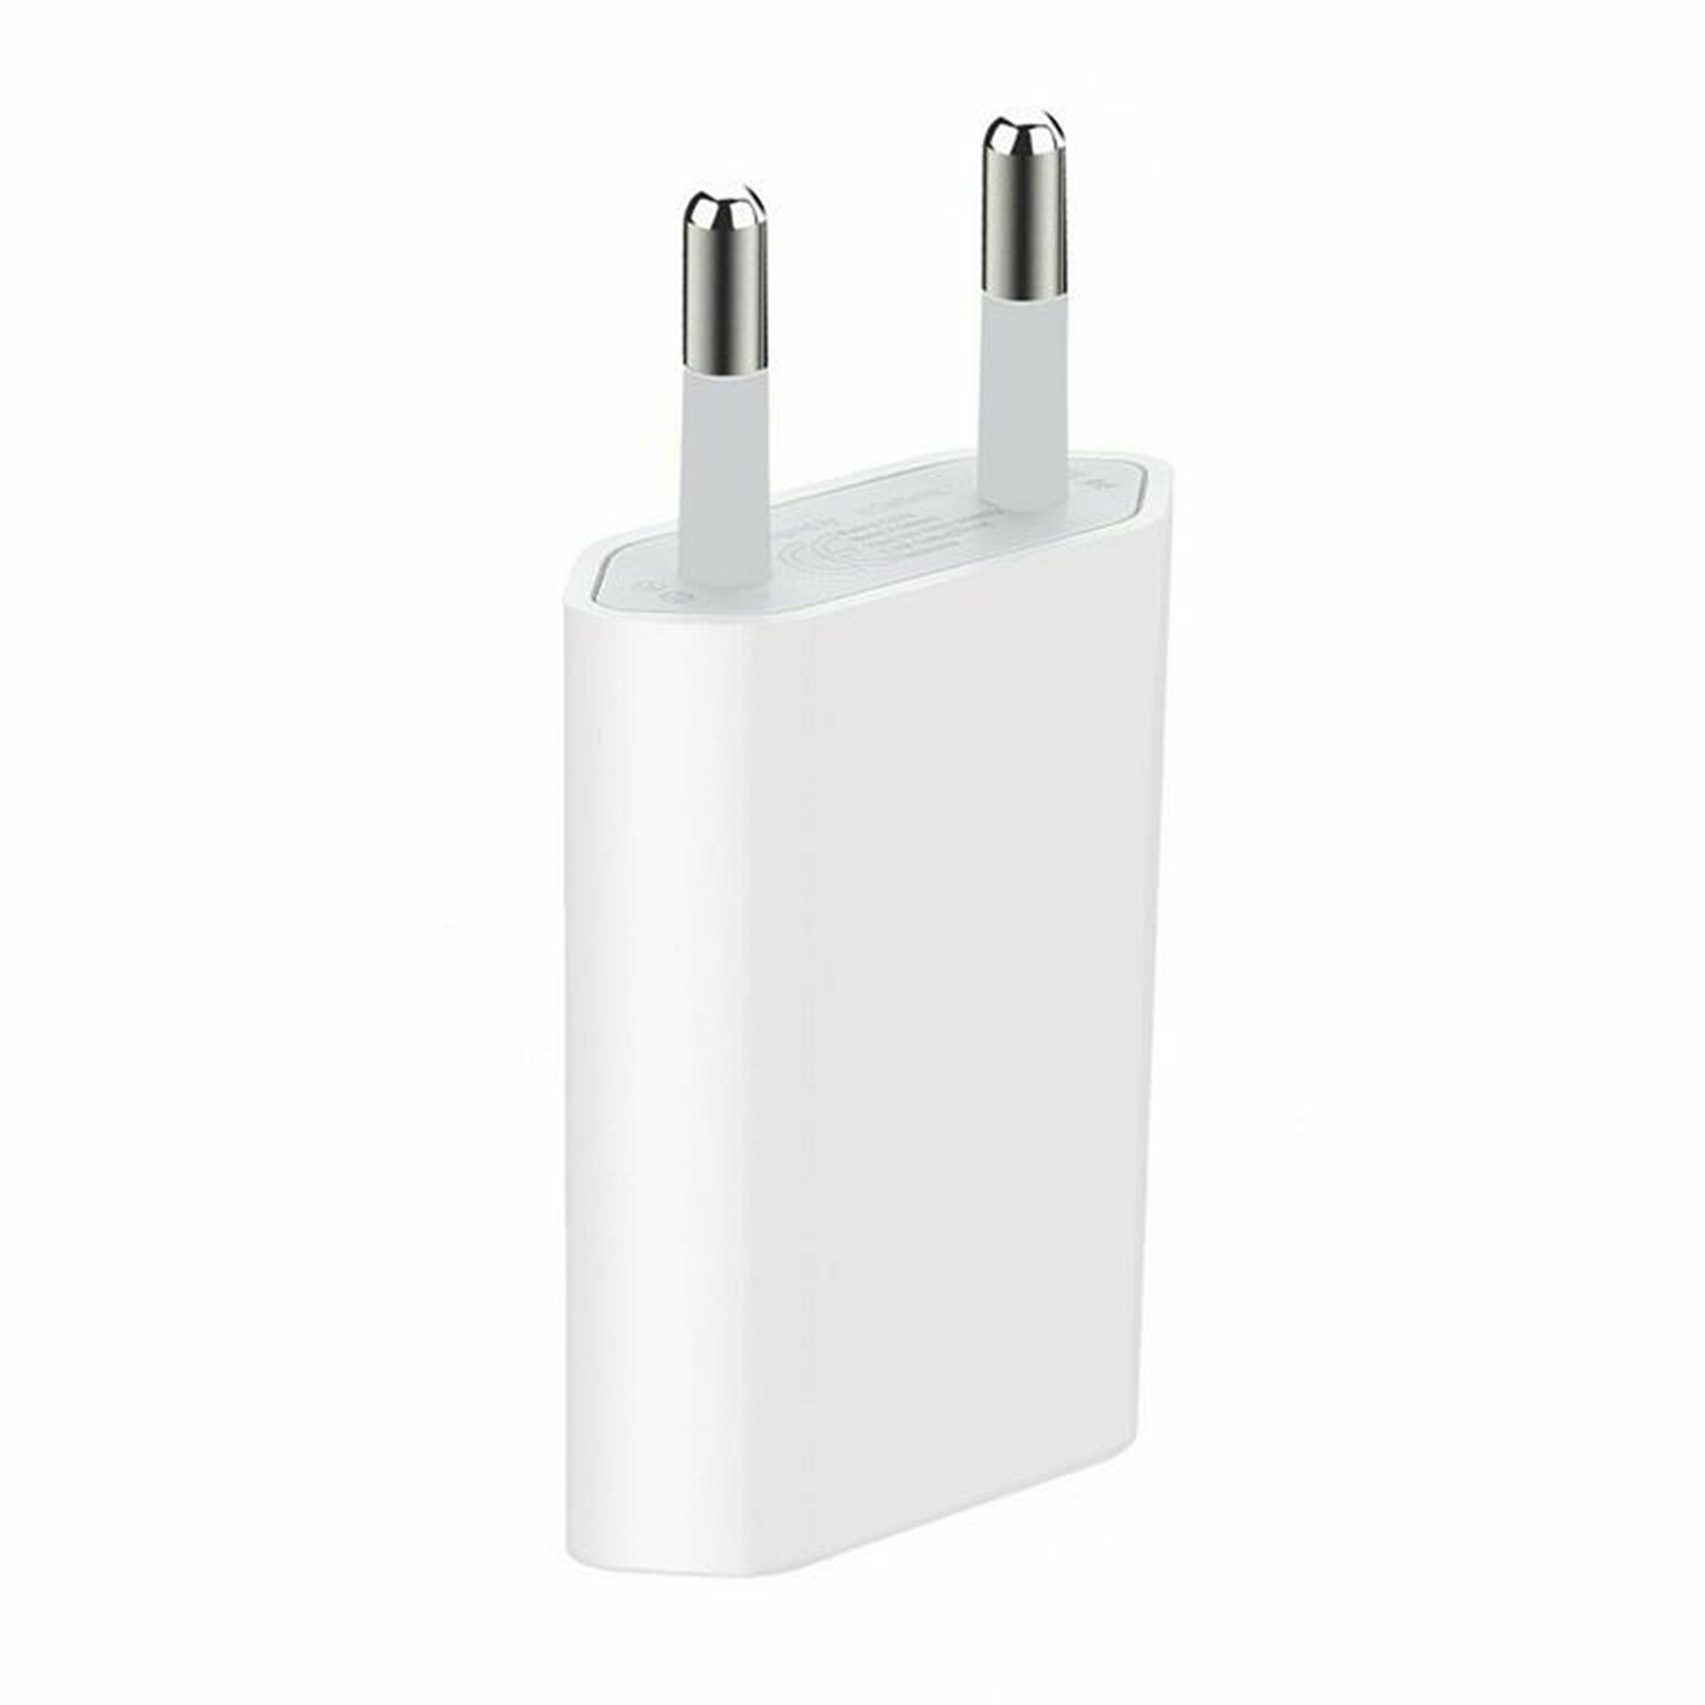 iPhone 8 5W USB Power Adapter